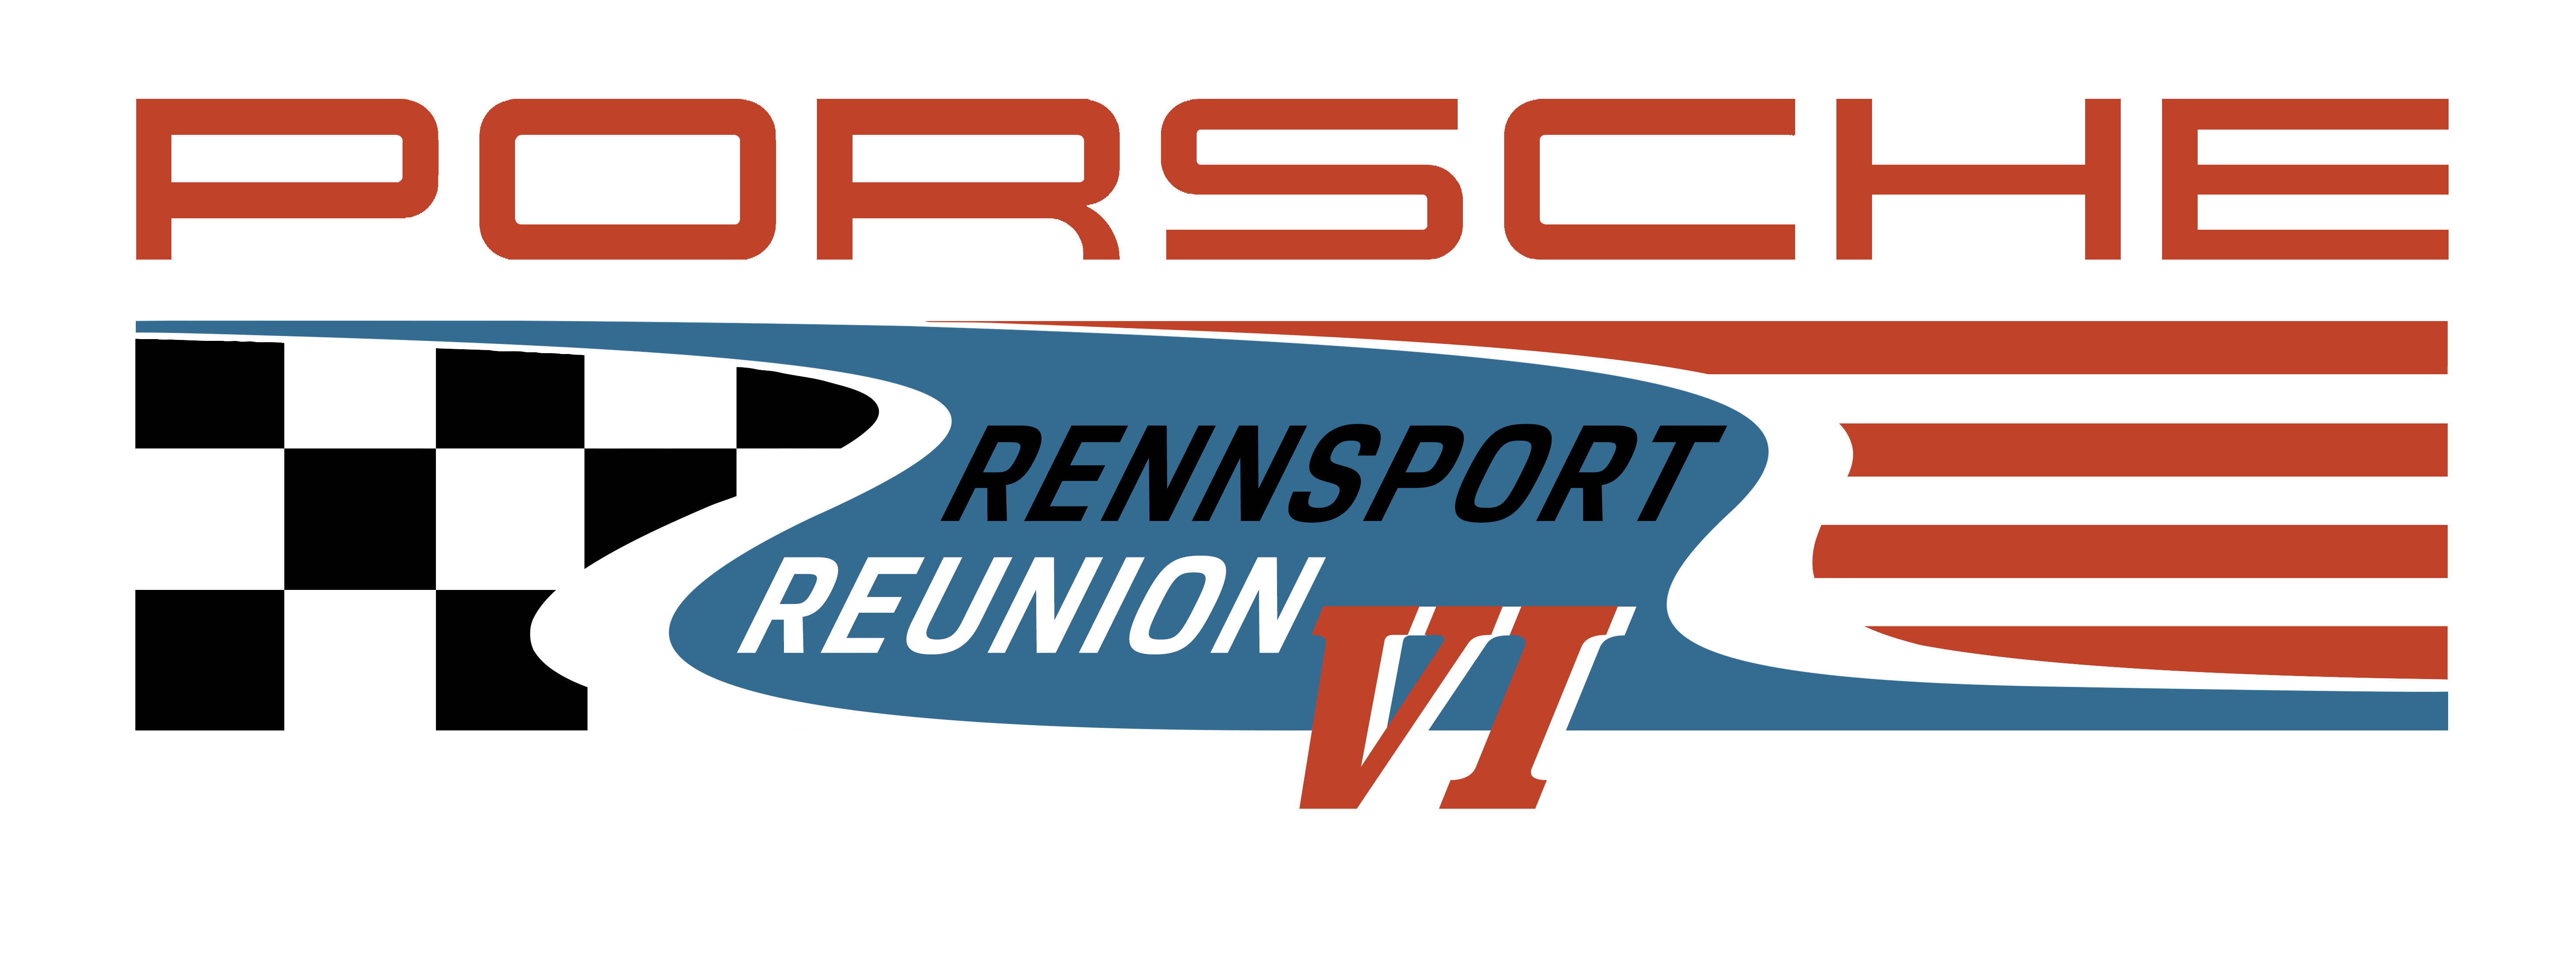 , Amelia Concours contest, Florida festival and Porsche Rennsport Reunion updates, ClassicCars.com Journal